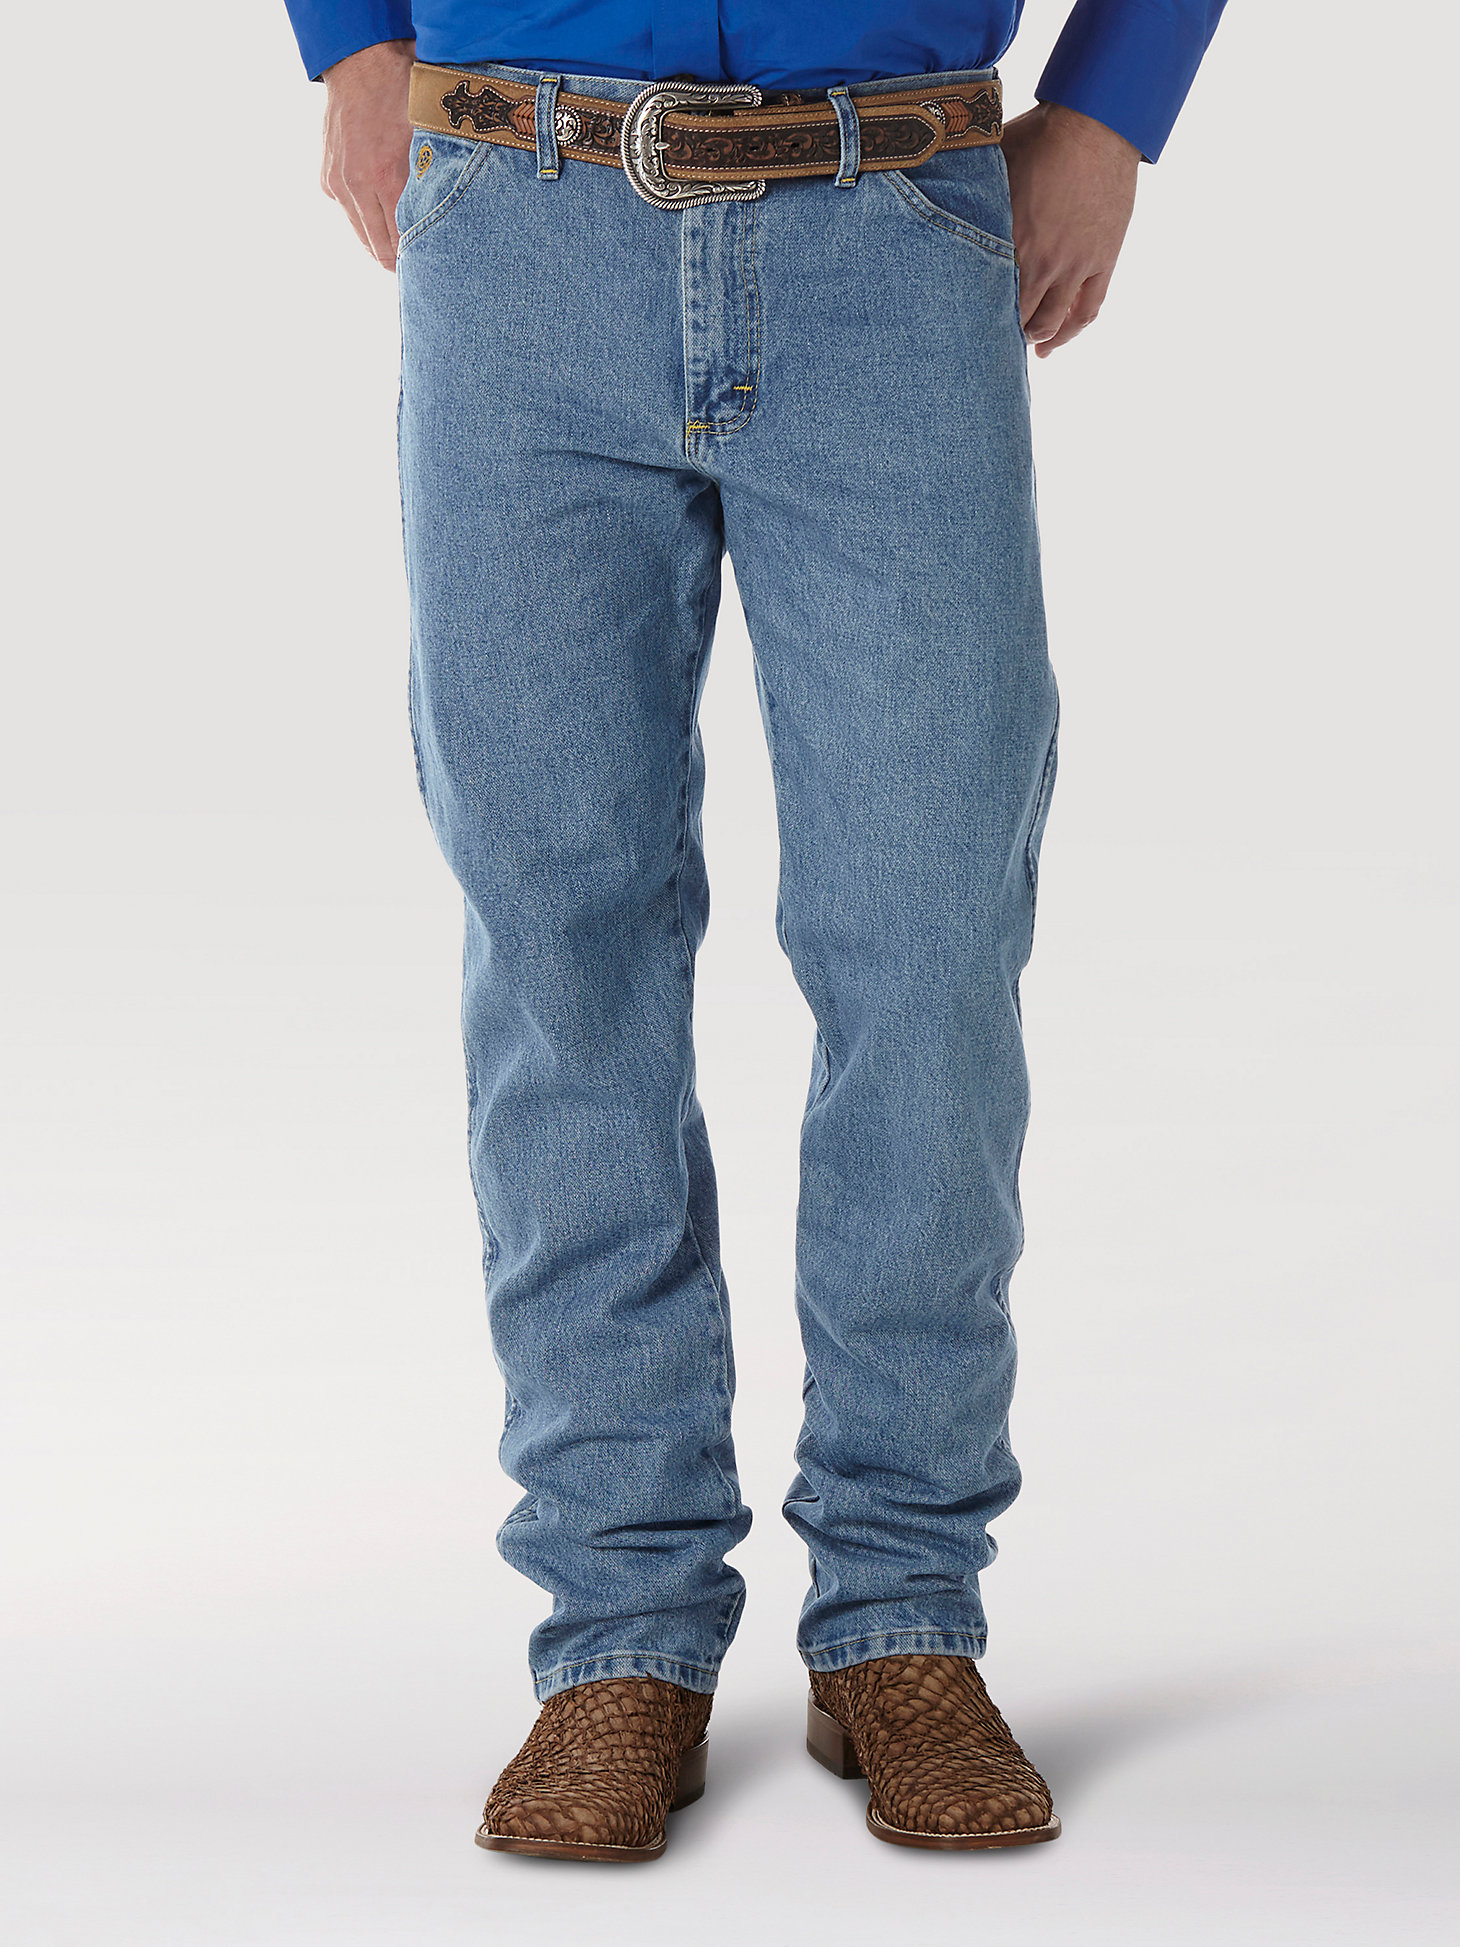 Arriba 98+ imagen wrangler men’s george strait cowboy cut original fit jean